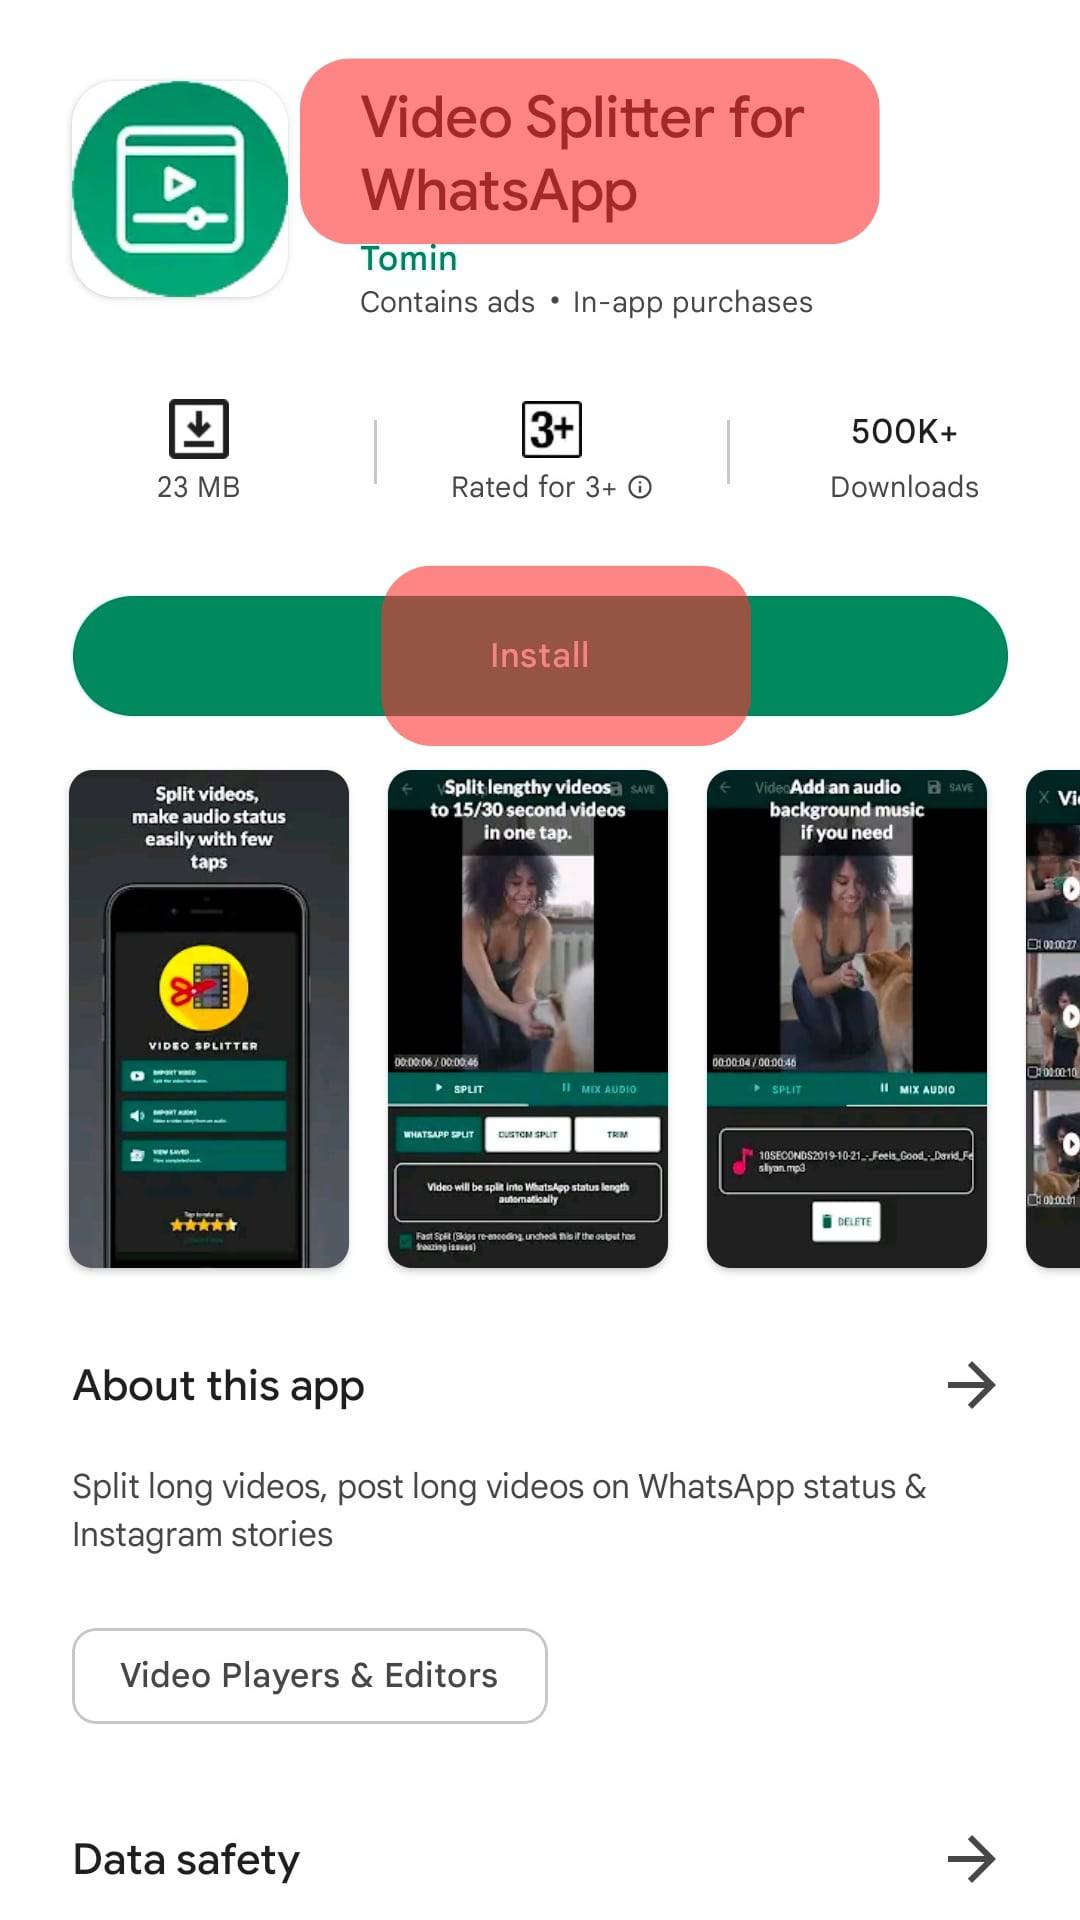 Descargue Video Splitter para WhatsApp desde Google Play Store.